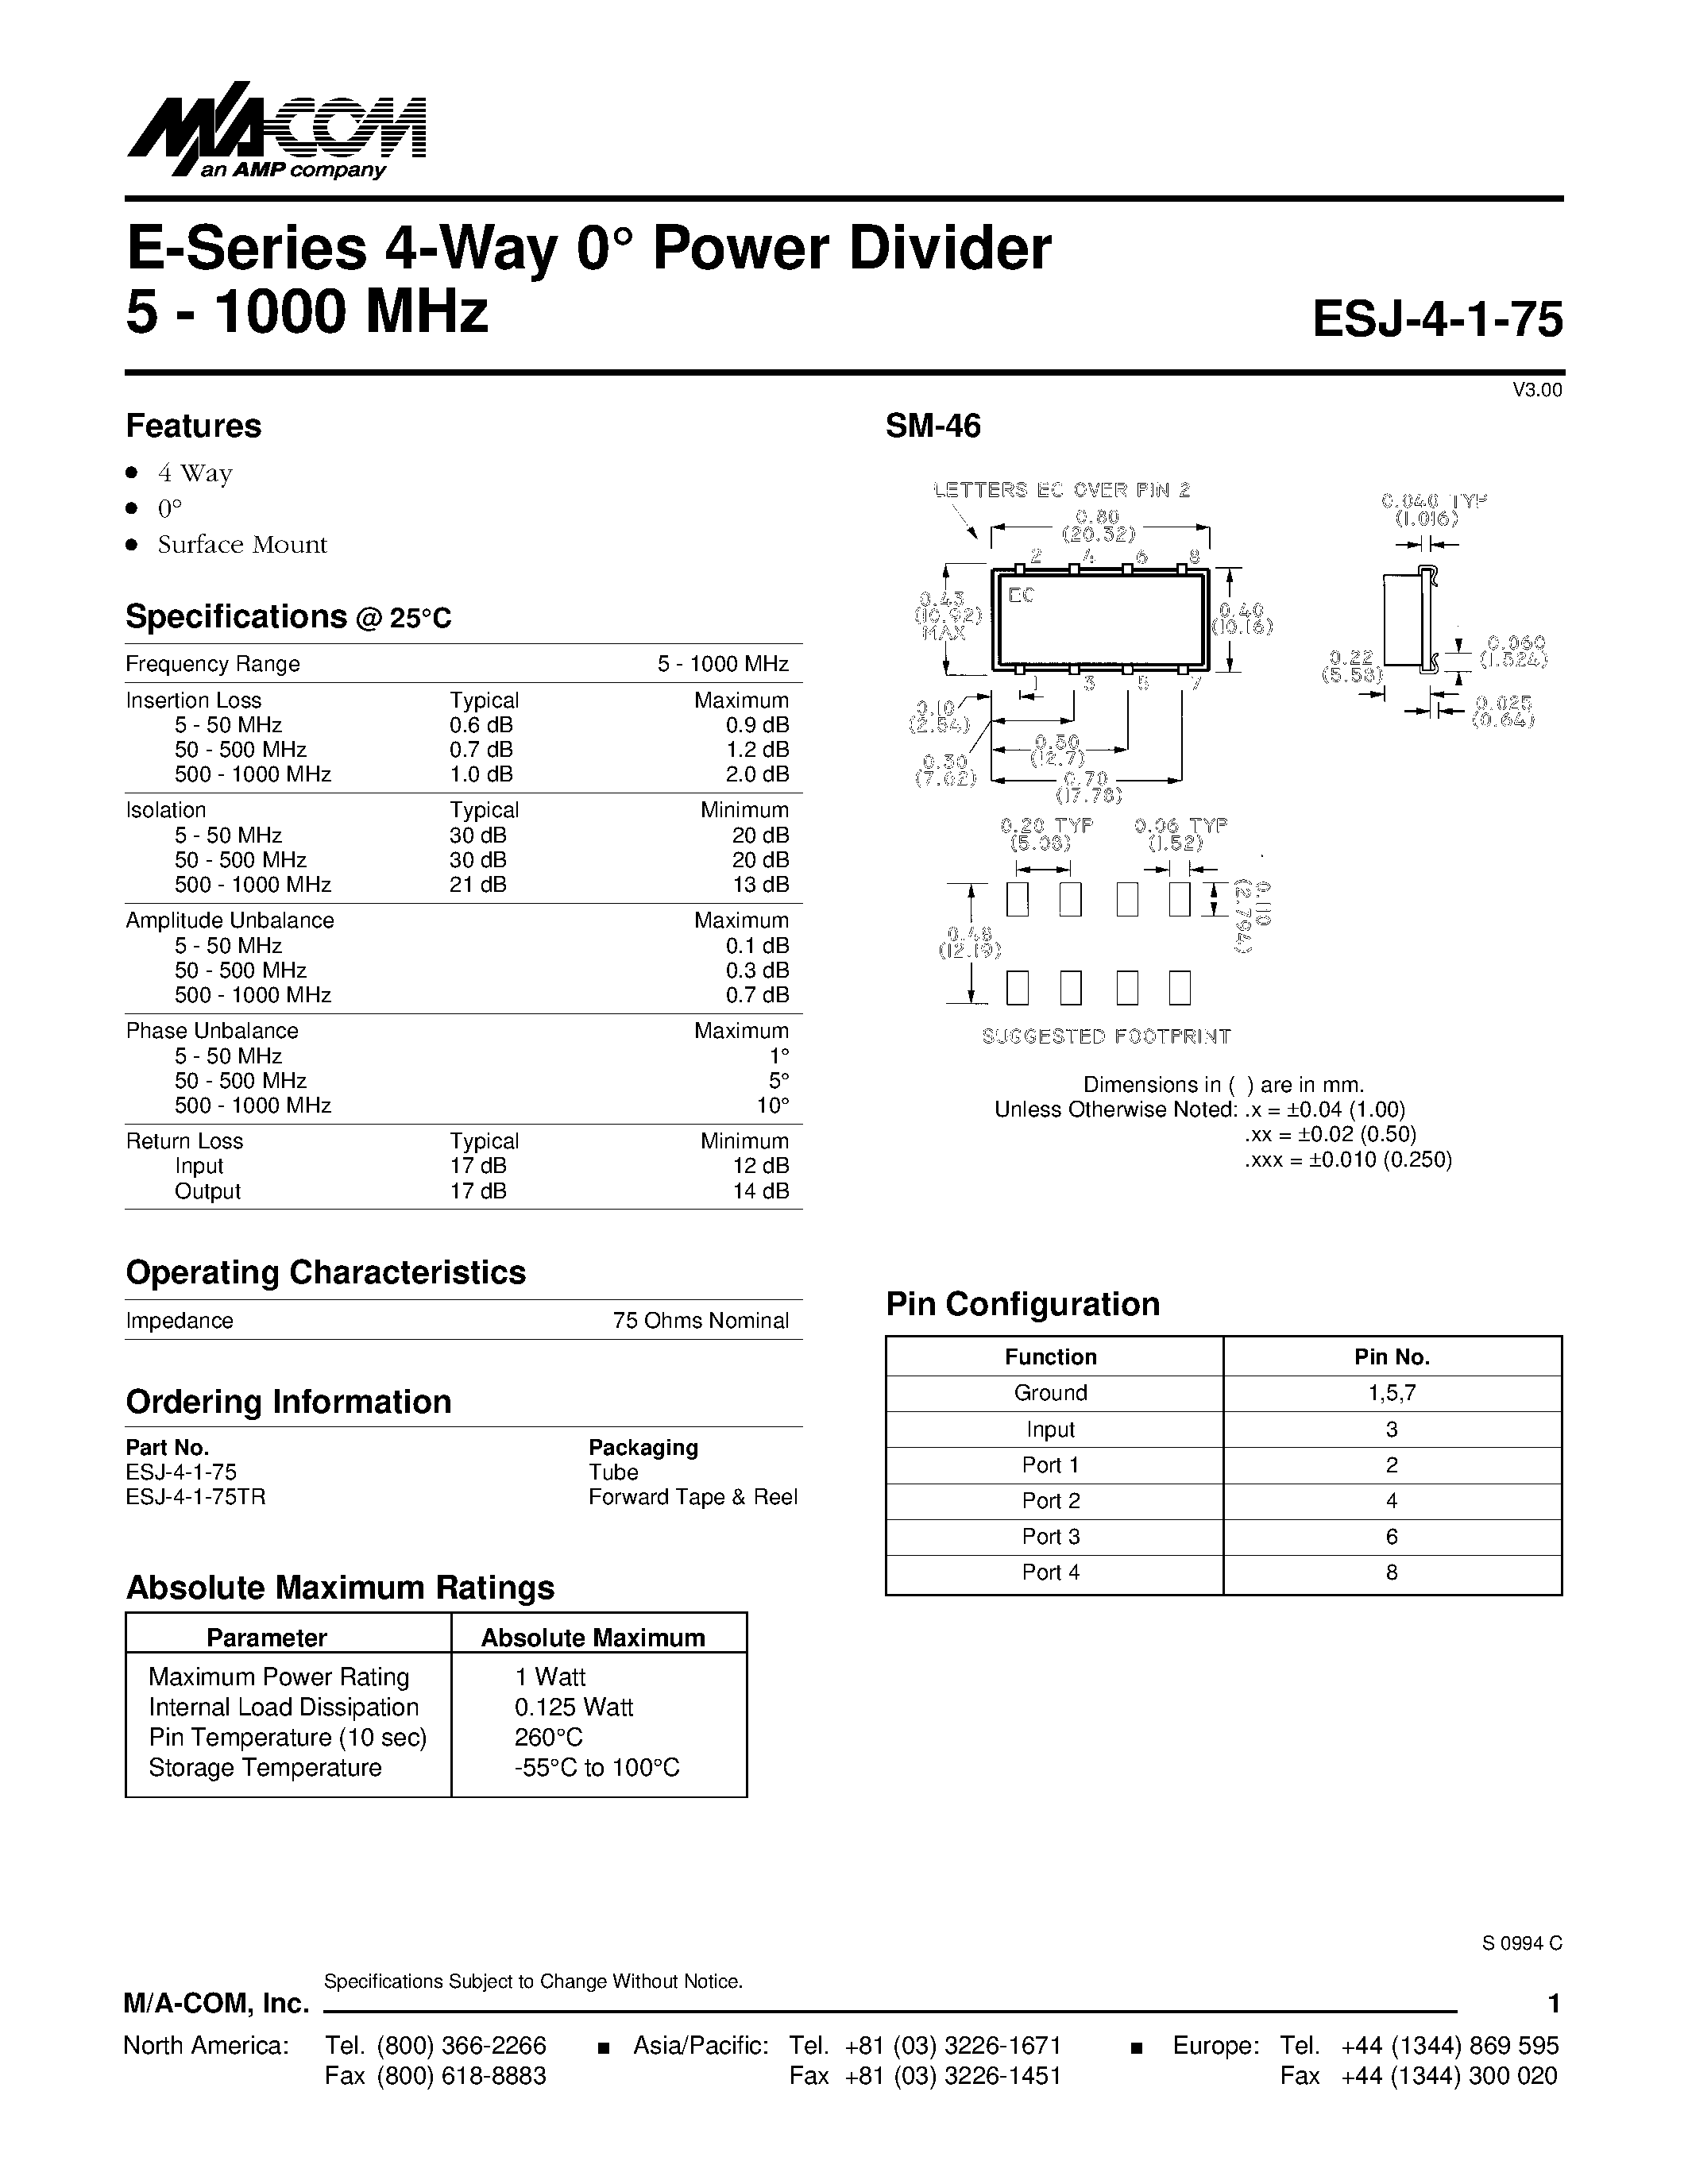 Datasheet ESJ-4-1-75TR - E-Series 4-Way 0 Power Divider 5 - 1000 MHz page 1